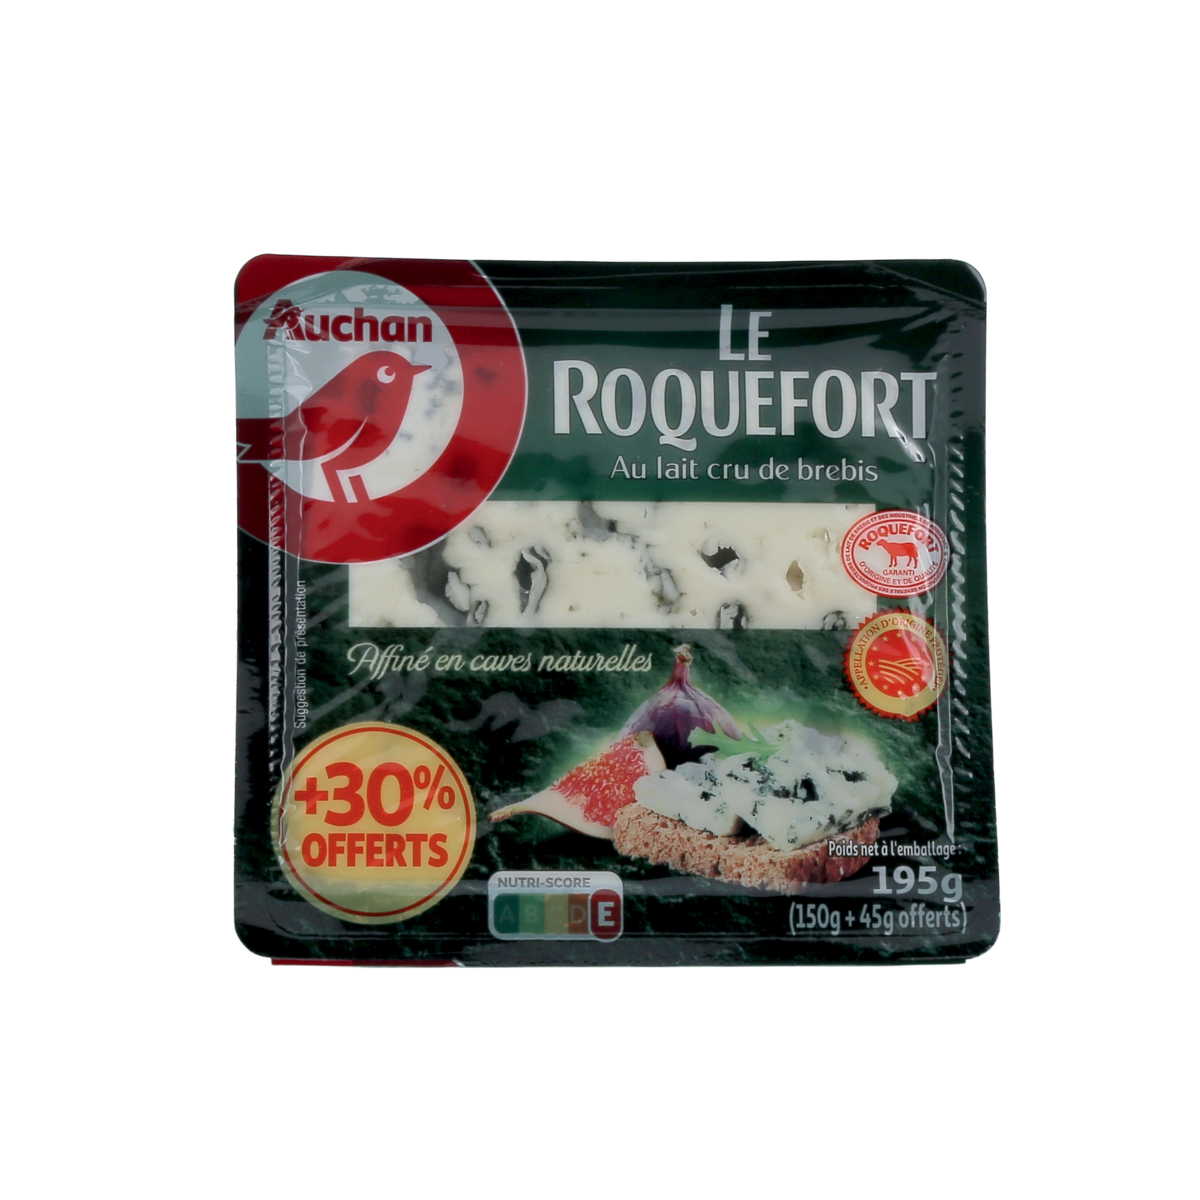 AUCHAN CULTIVONS LE BON Roquefort AOP 150g+45g offert 195g